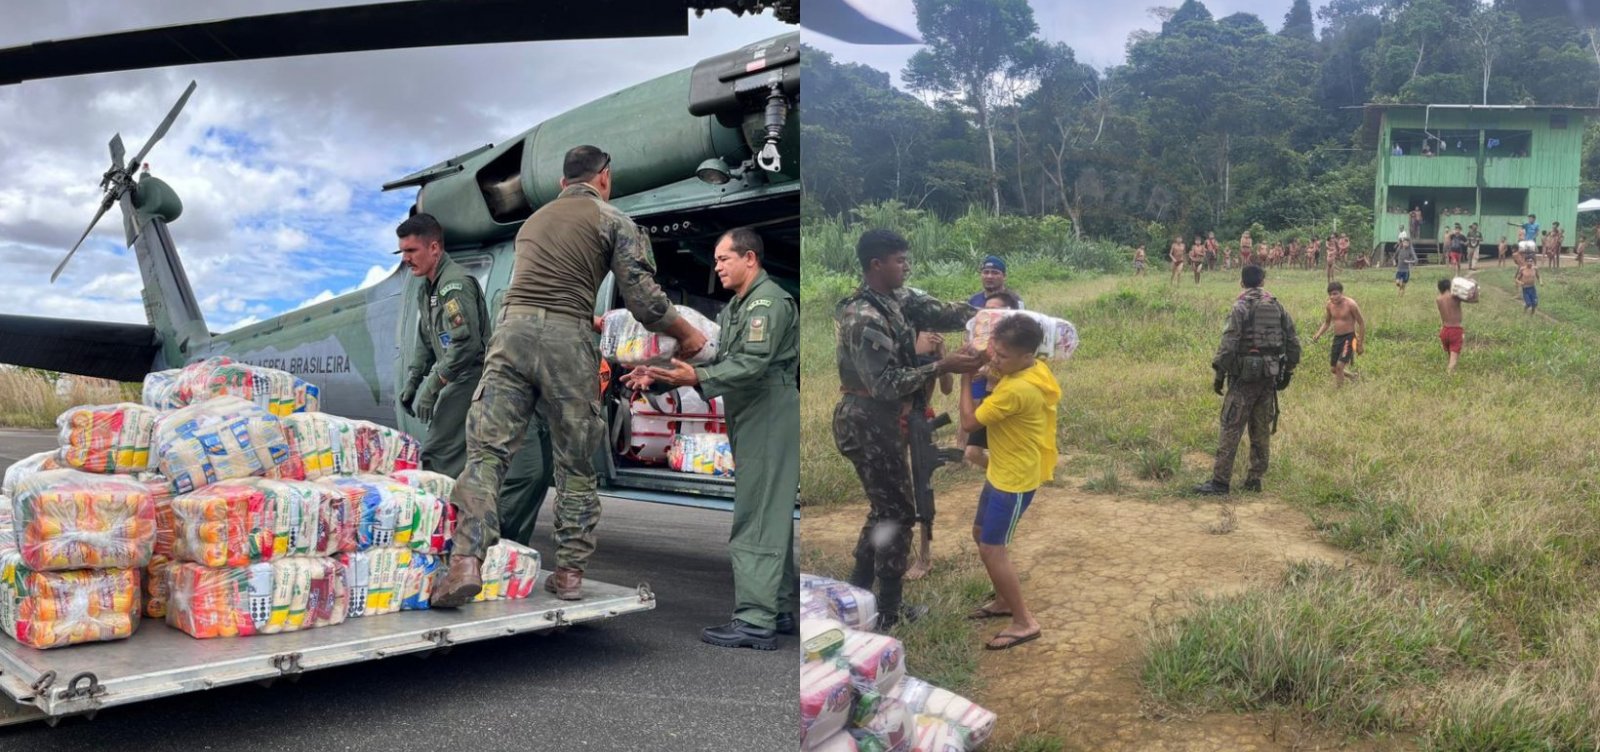 FAB distribuí cerca de 4 toneladas de alimentos para comunidades Yanomami